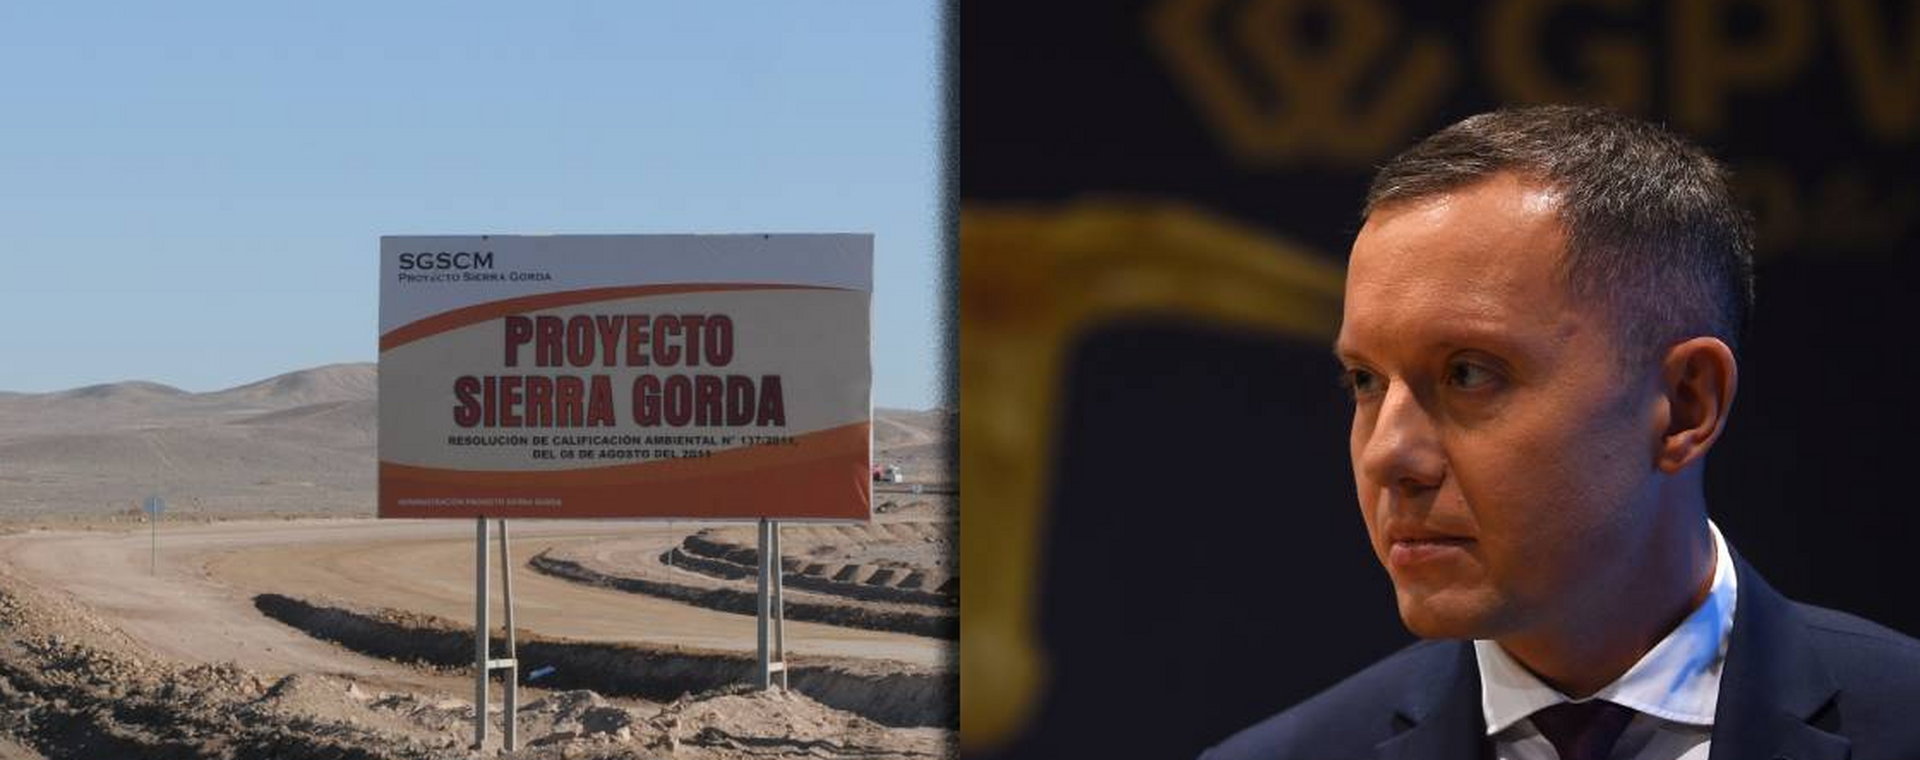 Kopalnia Sierra Gorda w Chile (fot. KGHM). Od prawej: Tomasz Zdzikot, prezes KGHM.